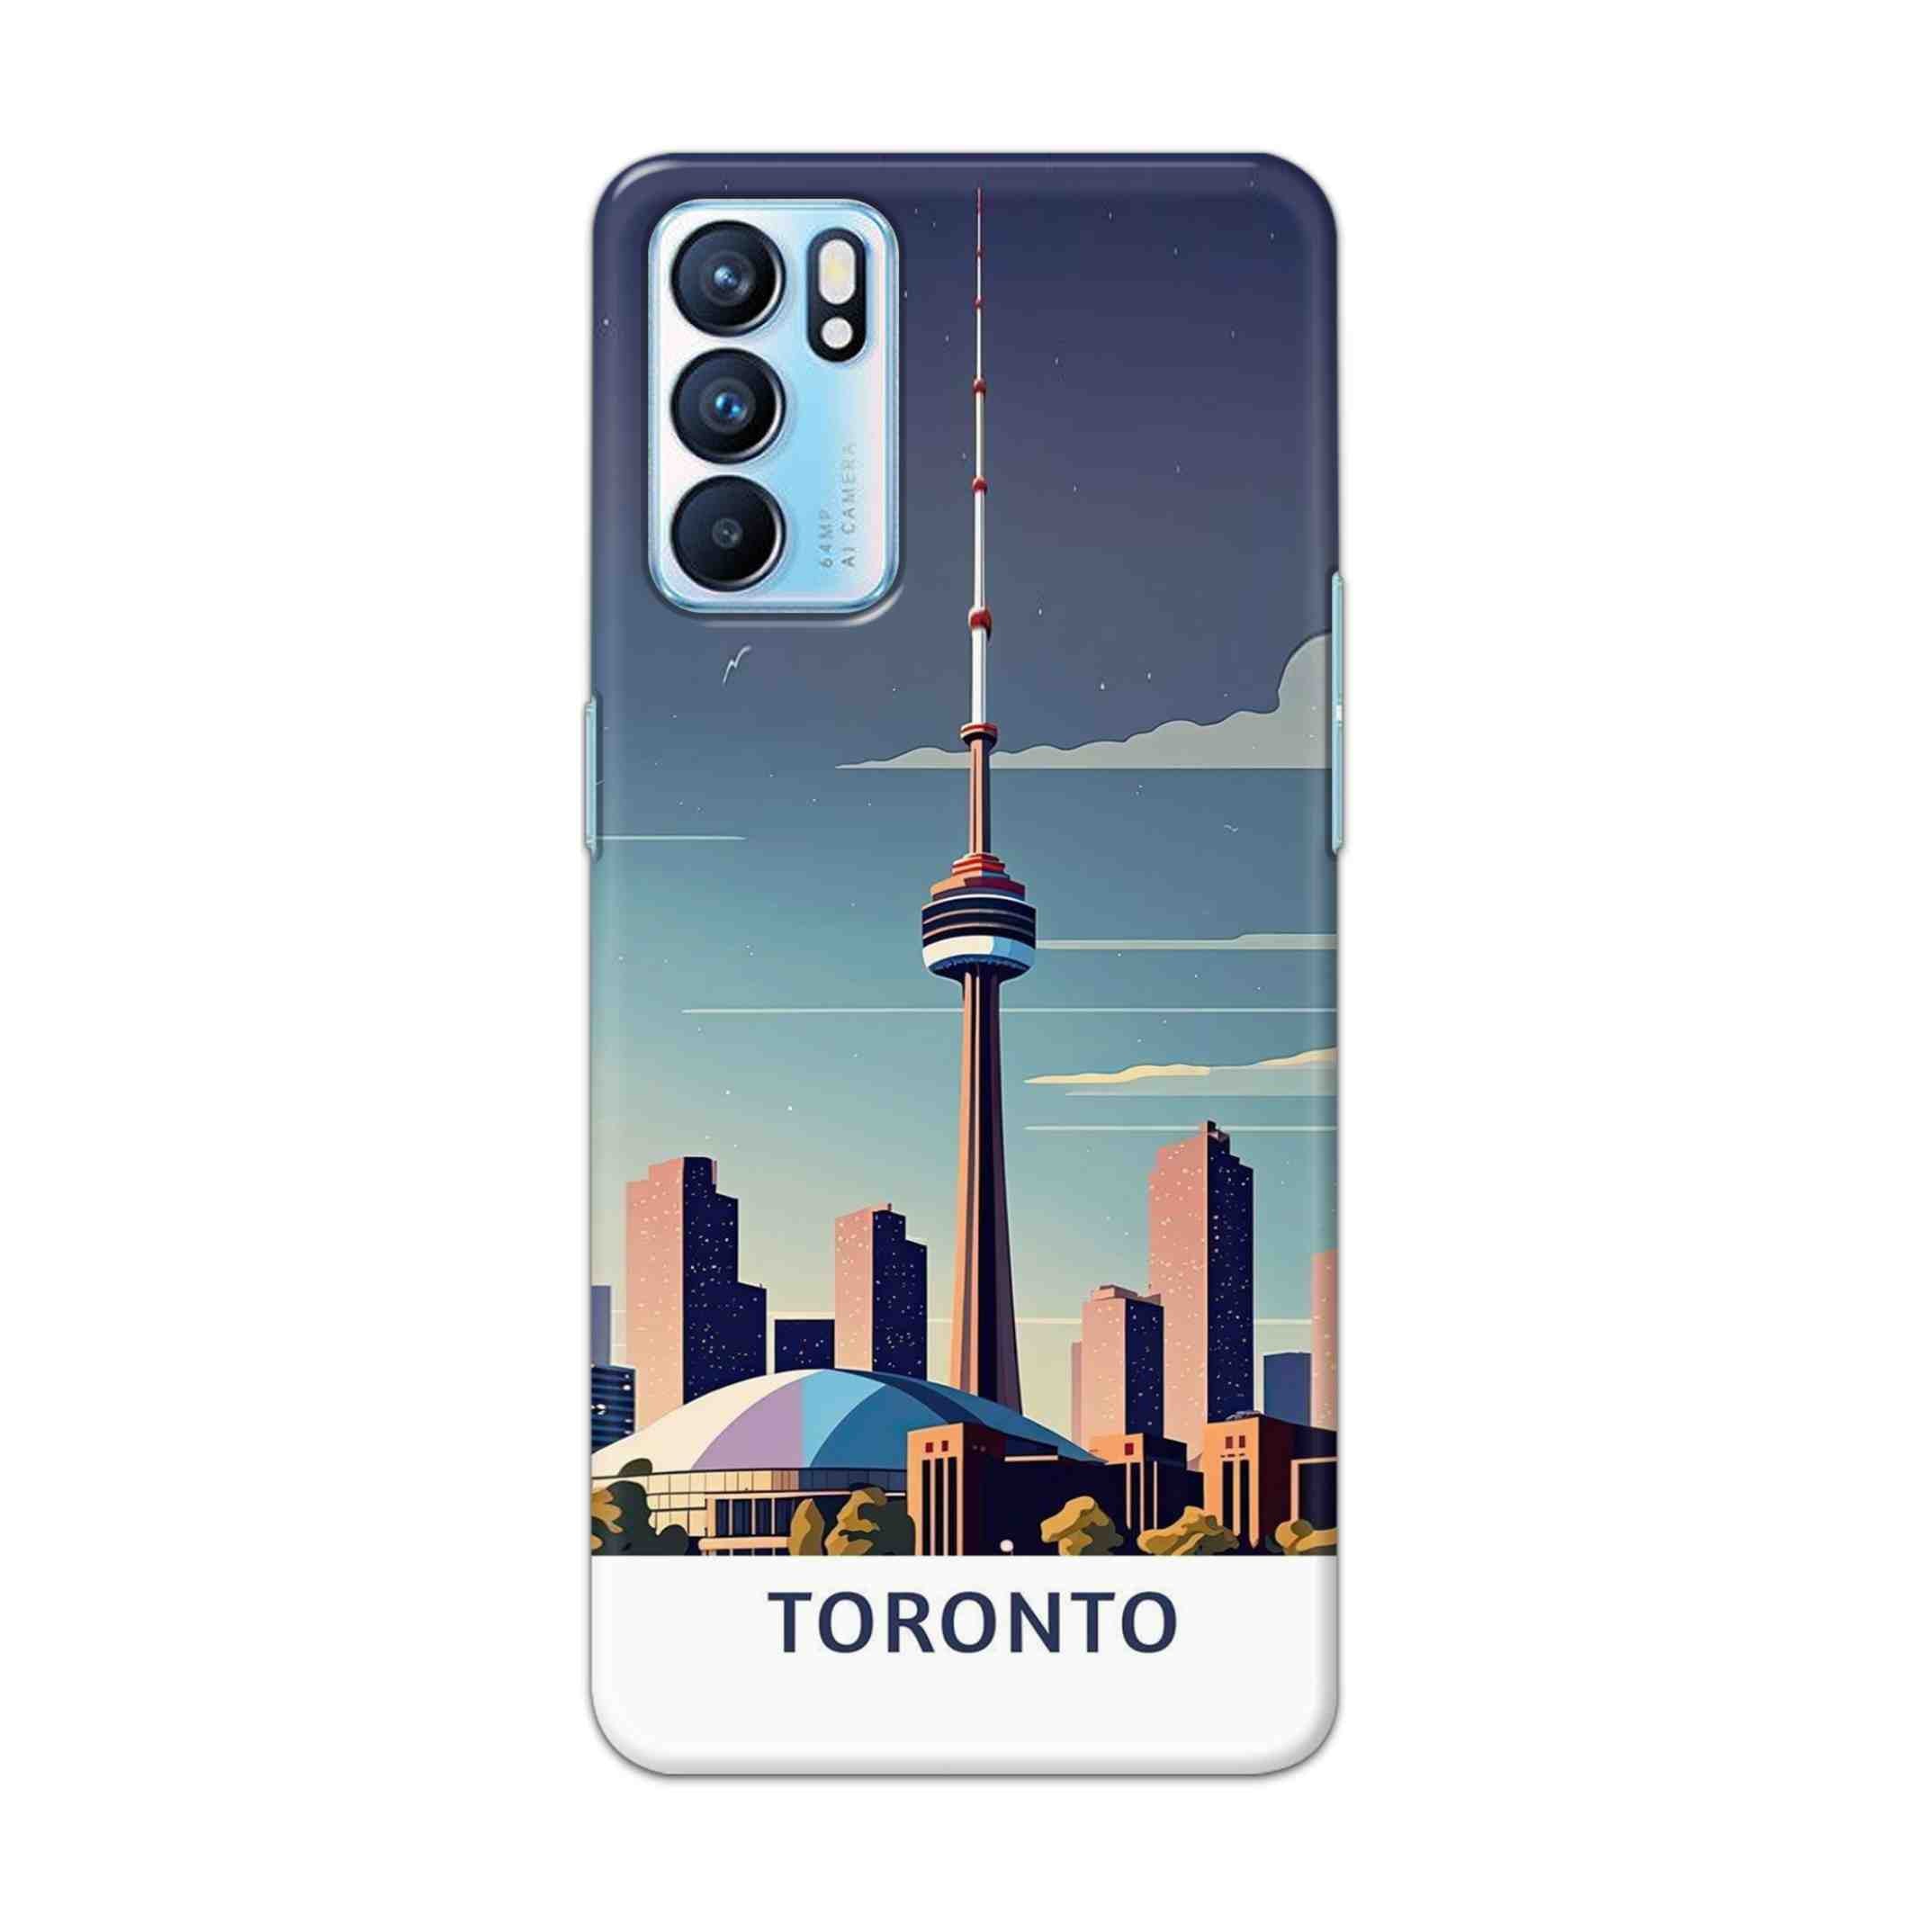 Buy Toronto Hard Back Mobile Phone Case Cover For OPPO RENO 6 Online